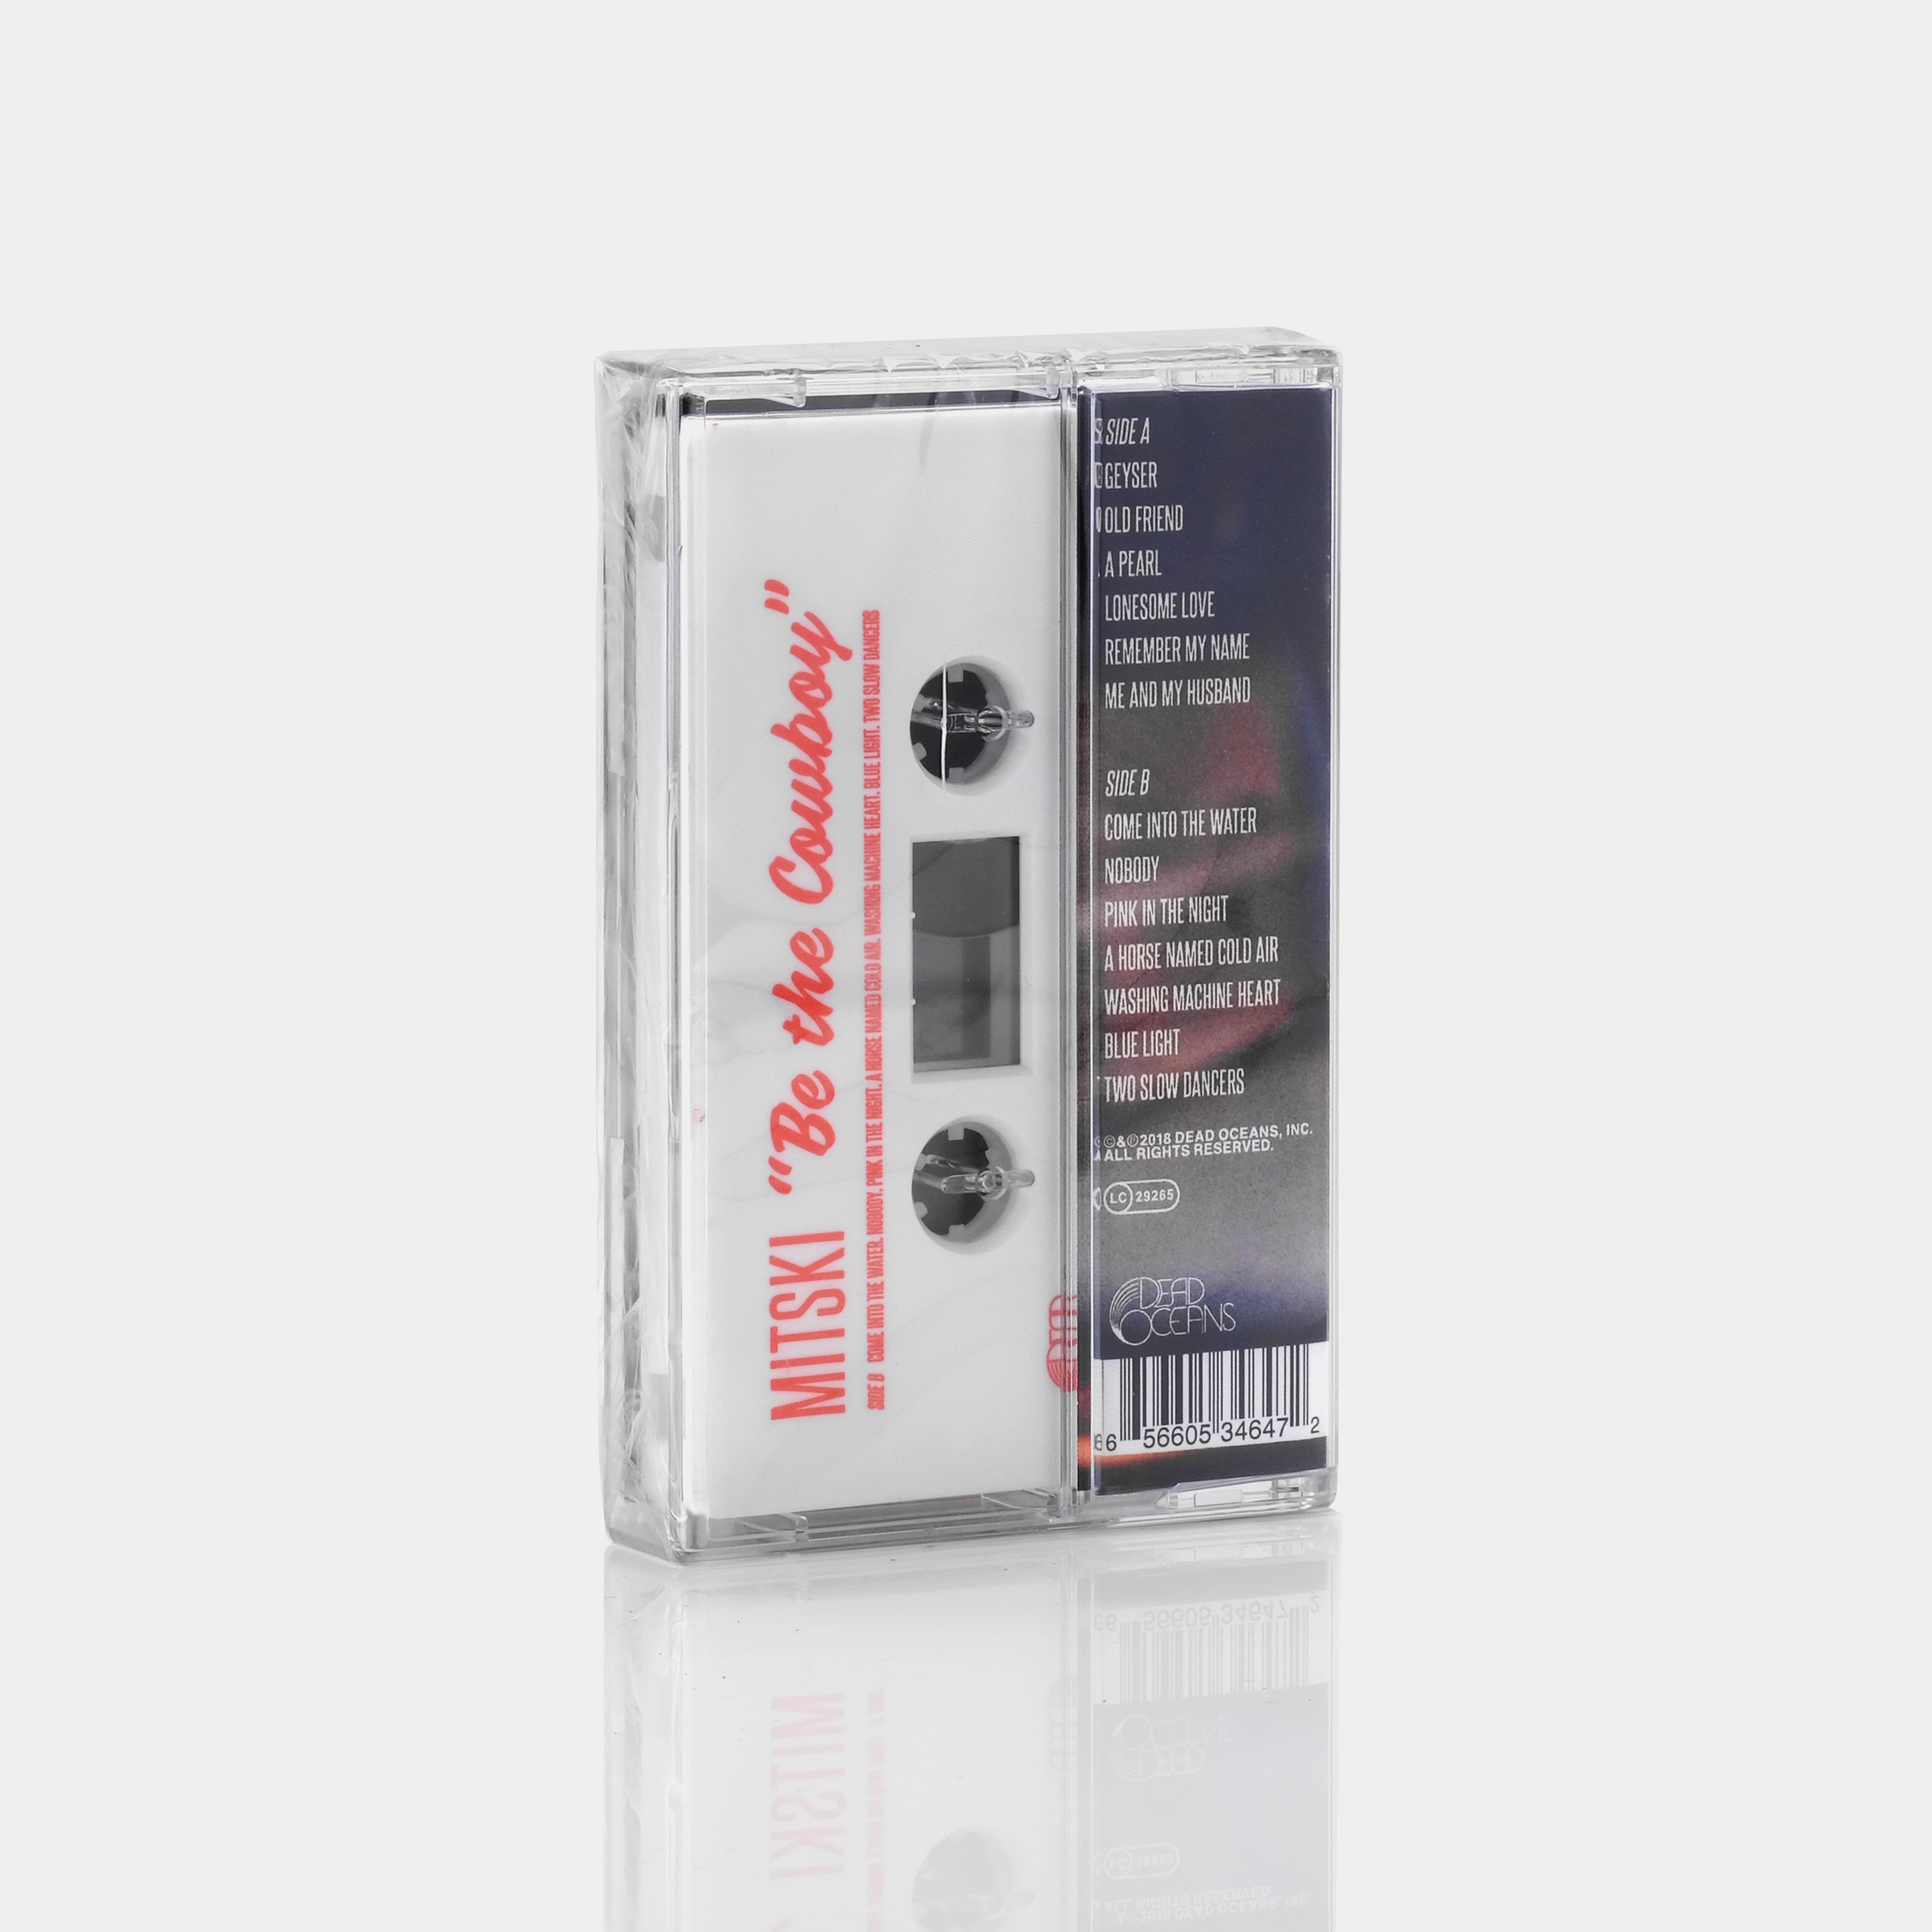 Mitski - Be The Cowboy Cassette Tape